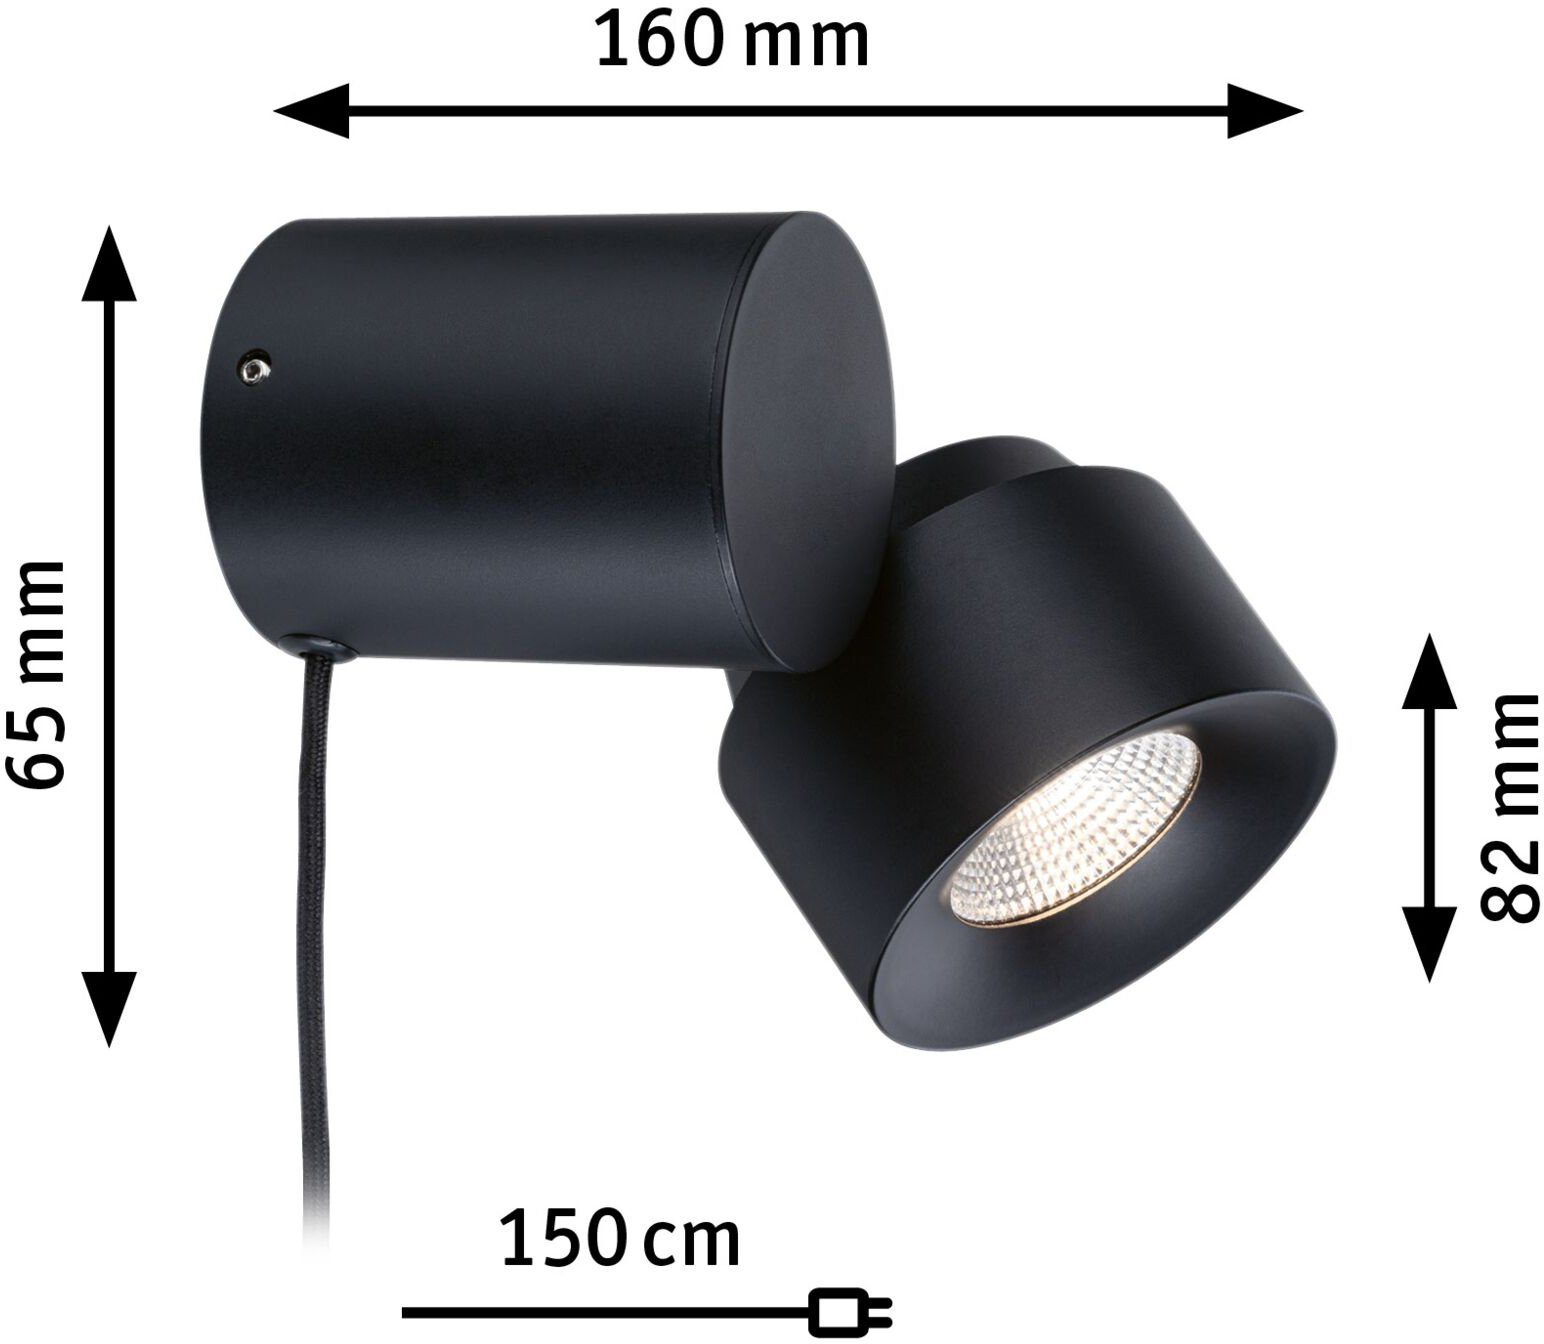 Paulmann Tischleuchte Puric LED LED, Schwarz/Grau, Metall integriert, fest Pane, Warmweiß, dimmbar